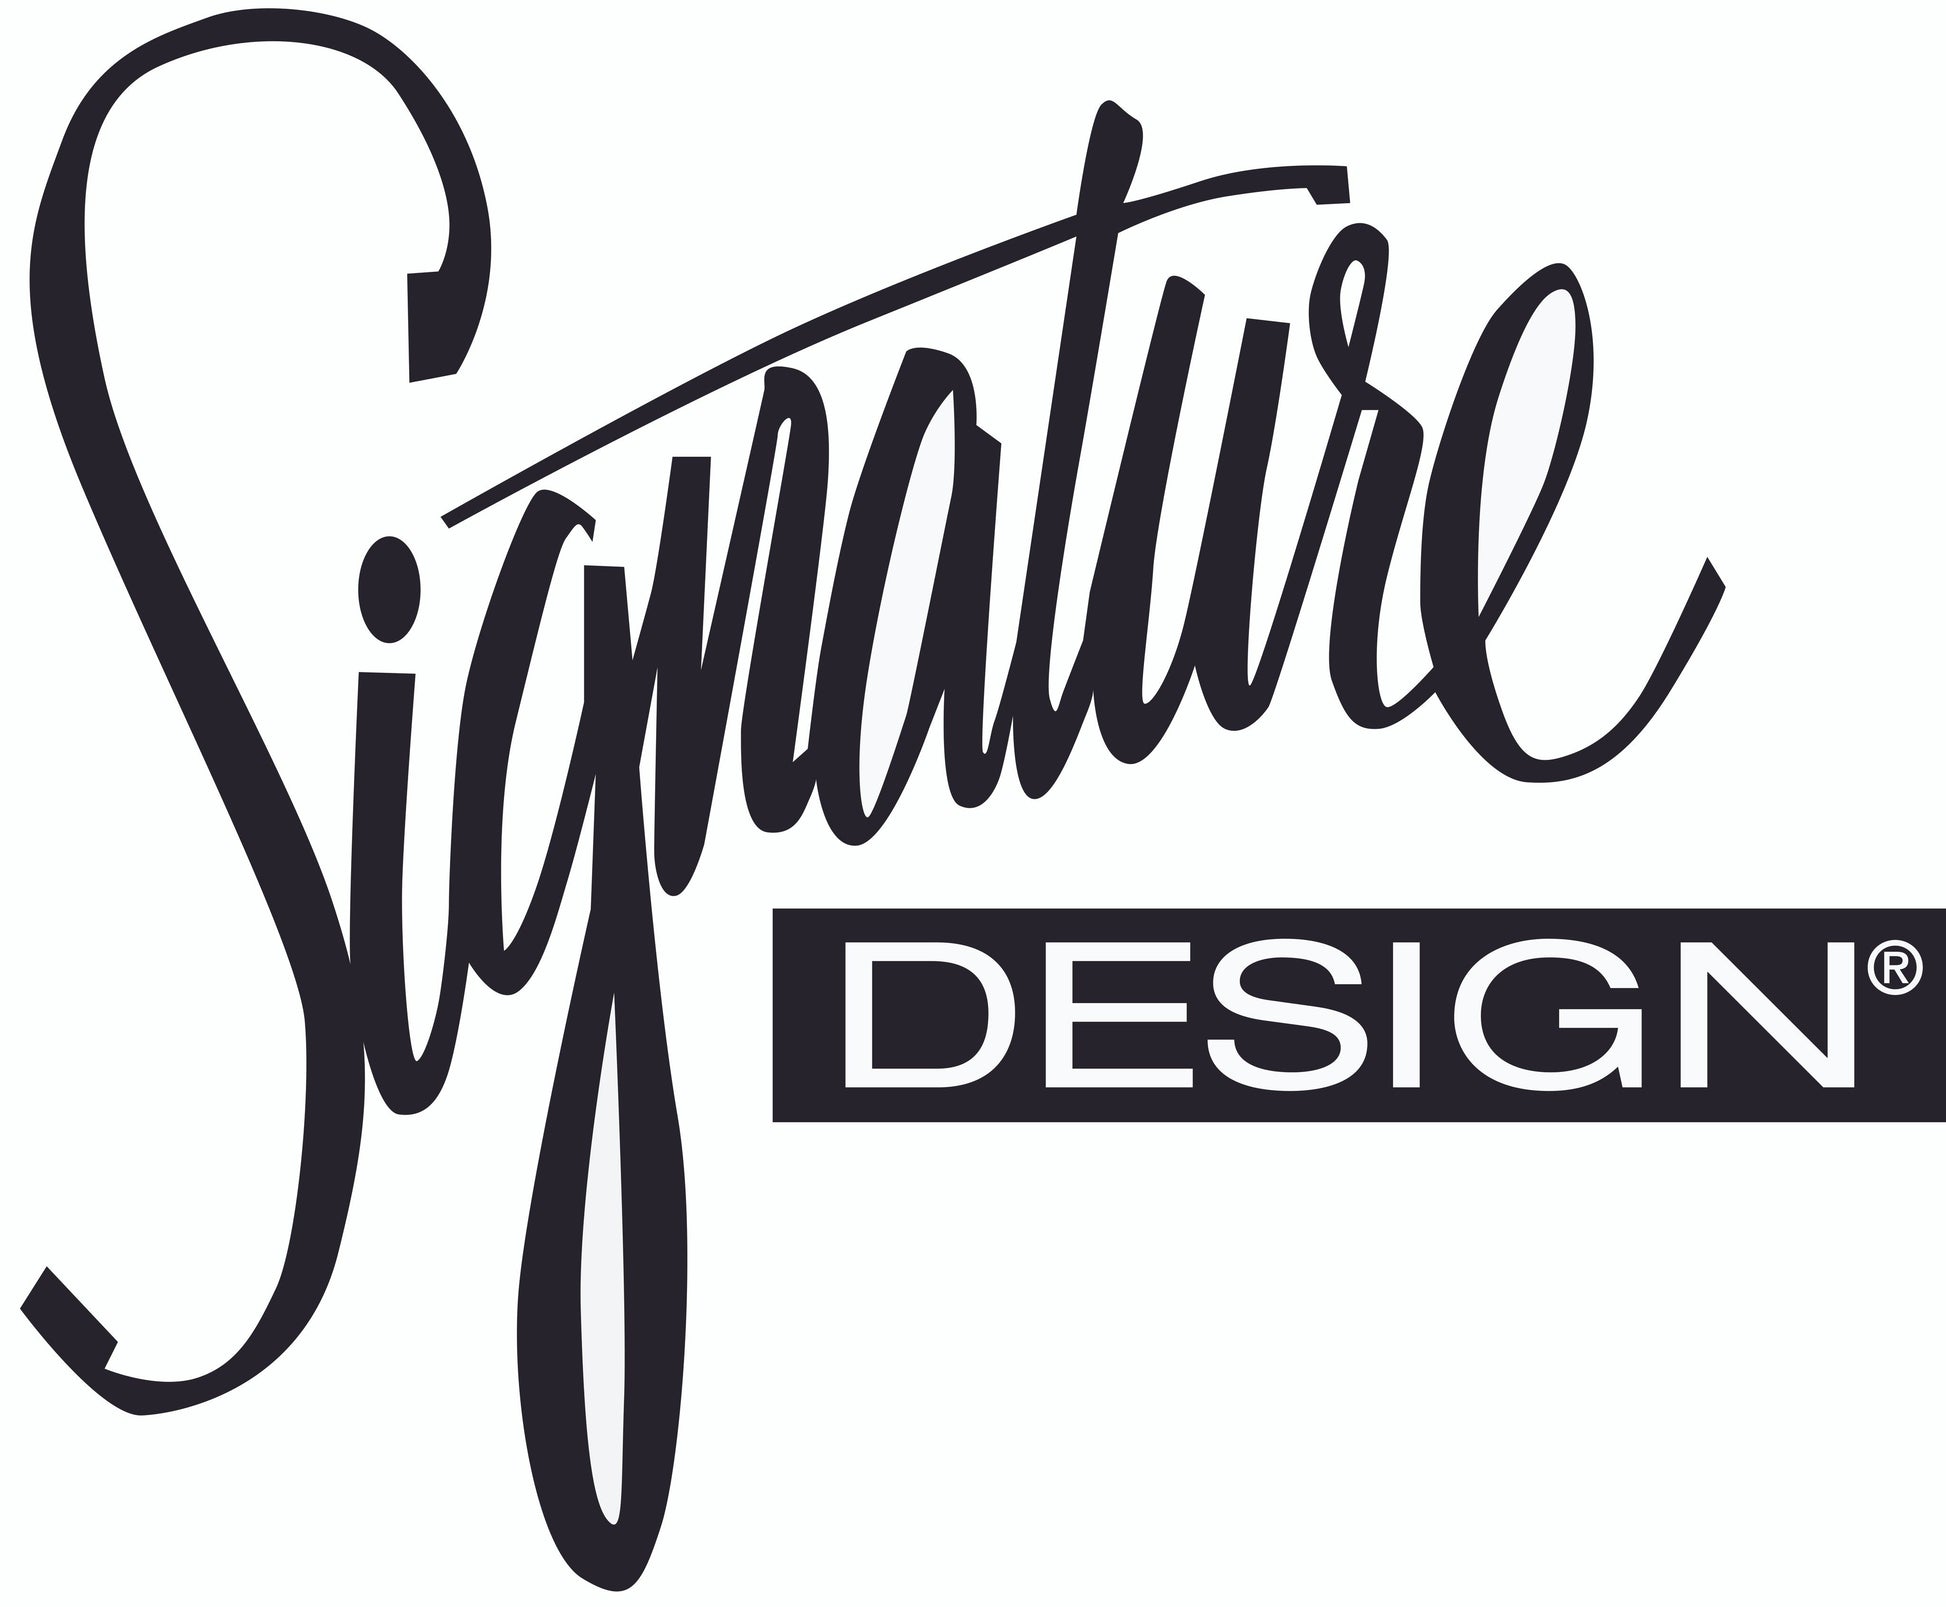 Bolanburg Display Cabinet Signature Design by Ashley®